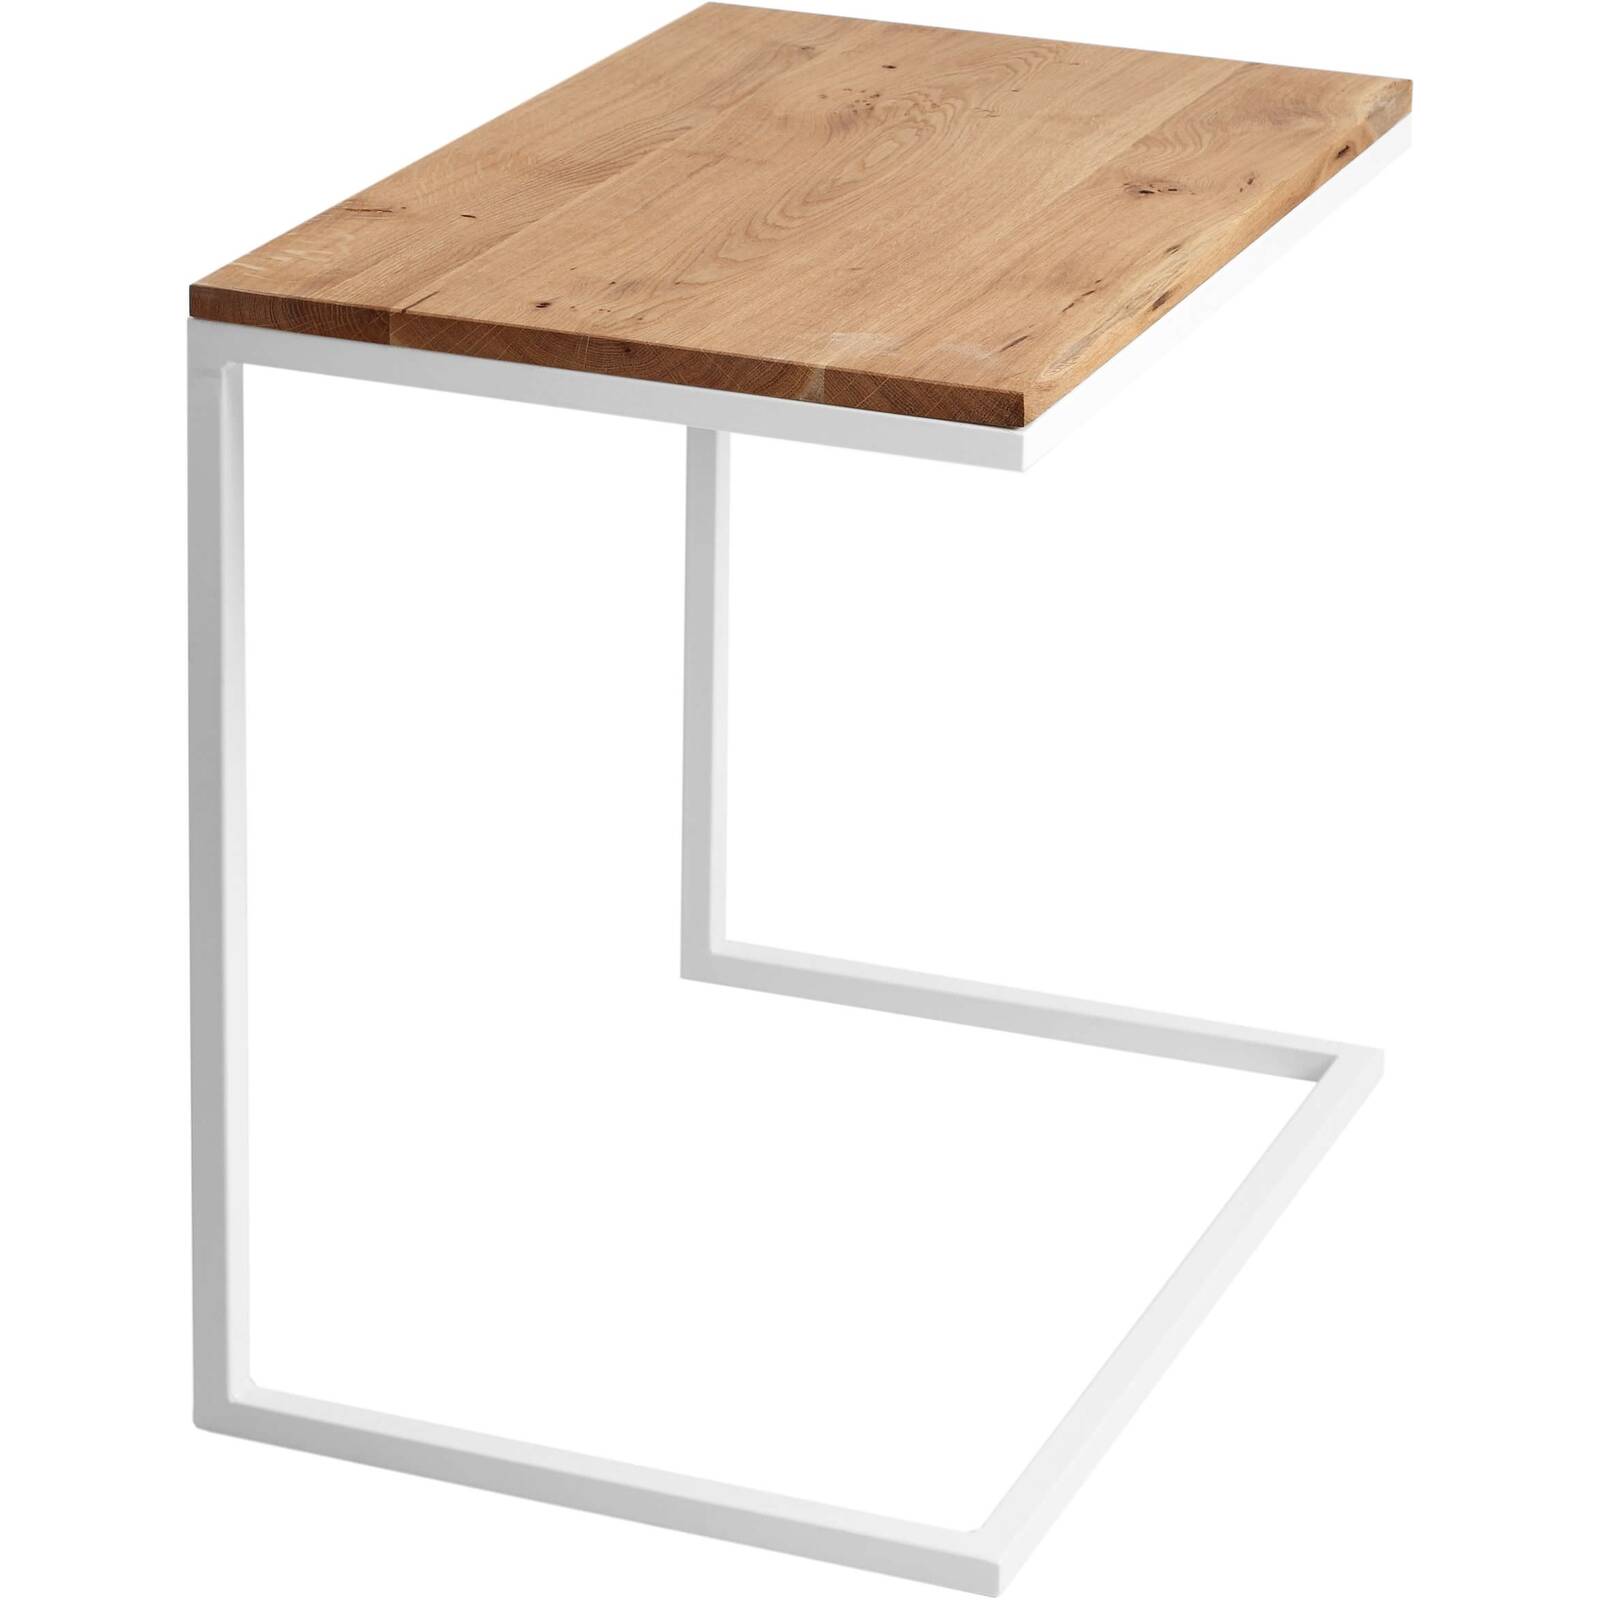 Table basse rectangulaire mÃ©tal blanc et bois chene massif